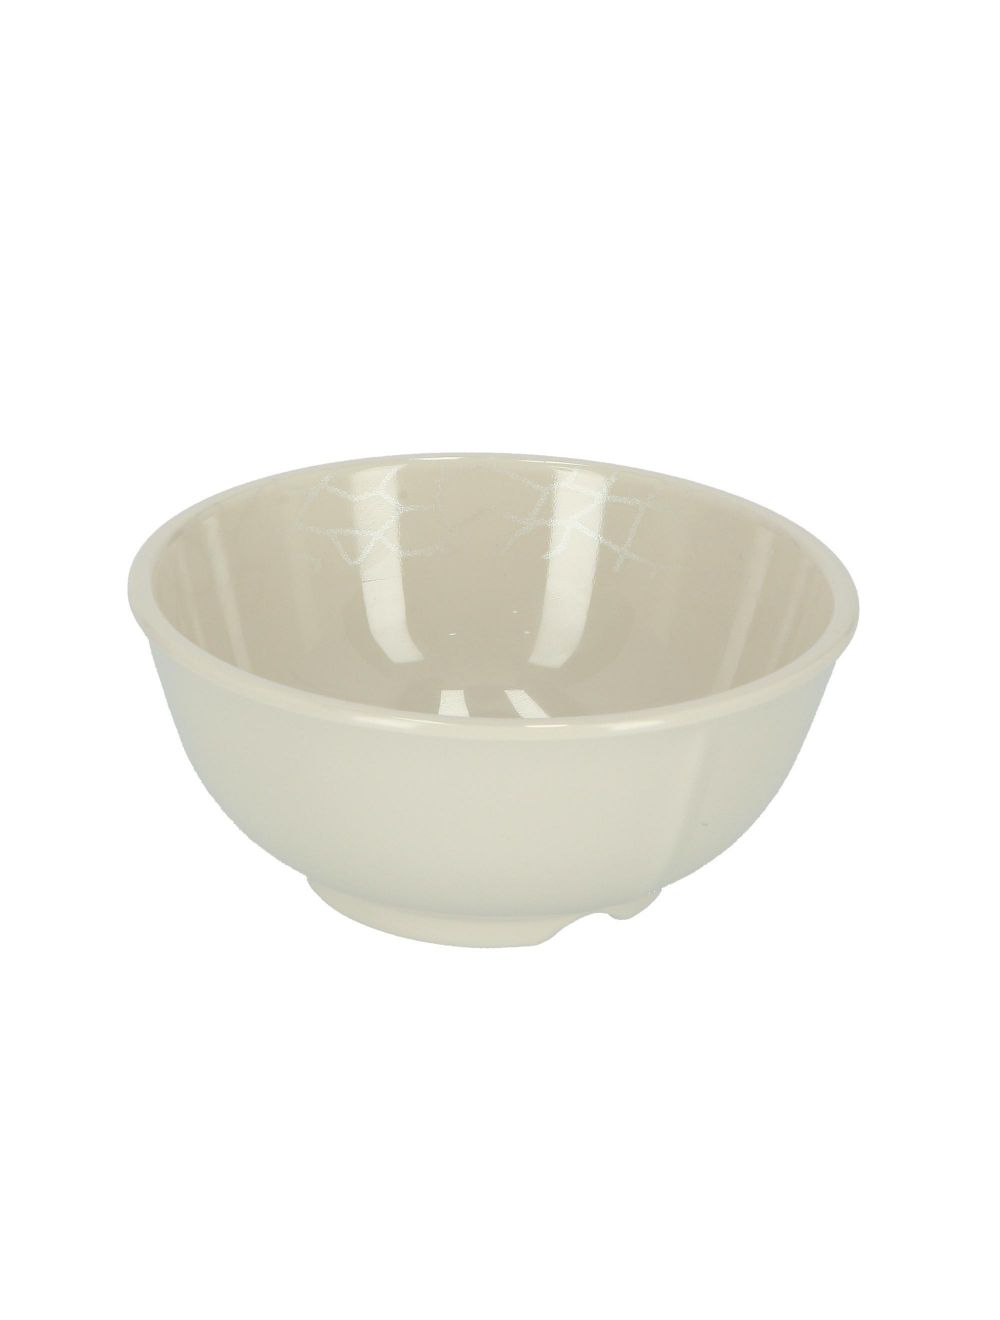 Royalford RF5089 Melamine White Pearl Bowl, 3.5 Inch